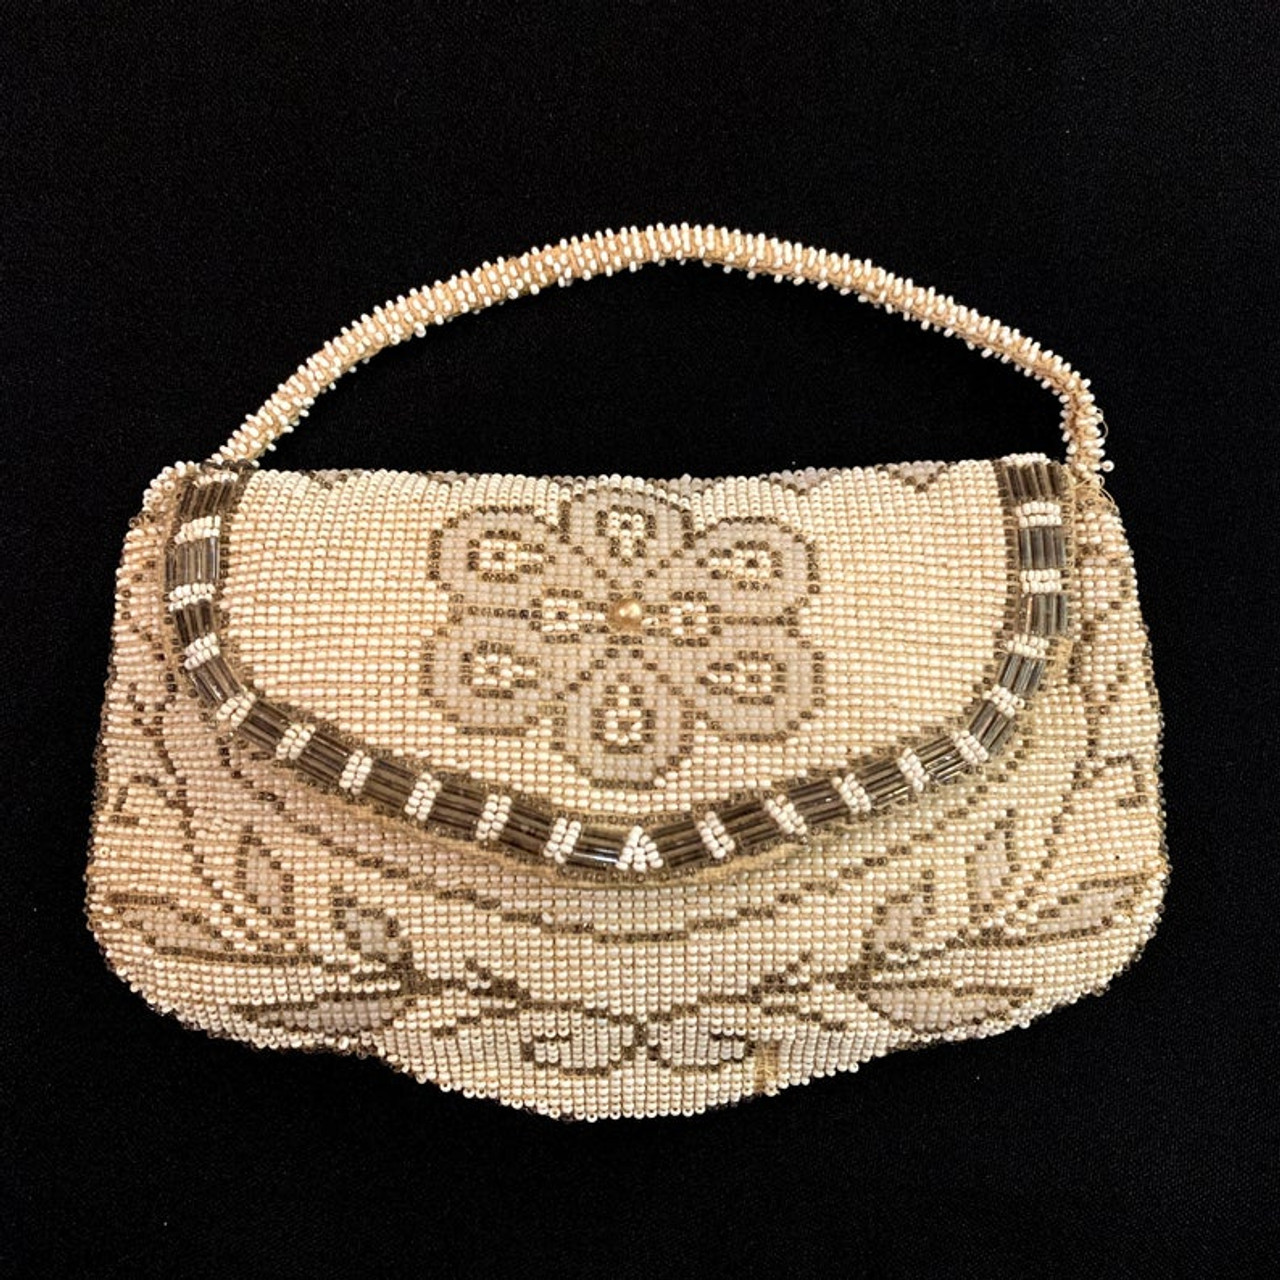 Vintage 1920s Beaded Clutch Bag